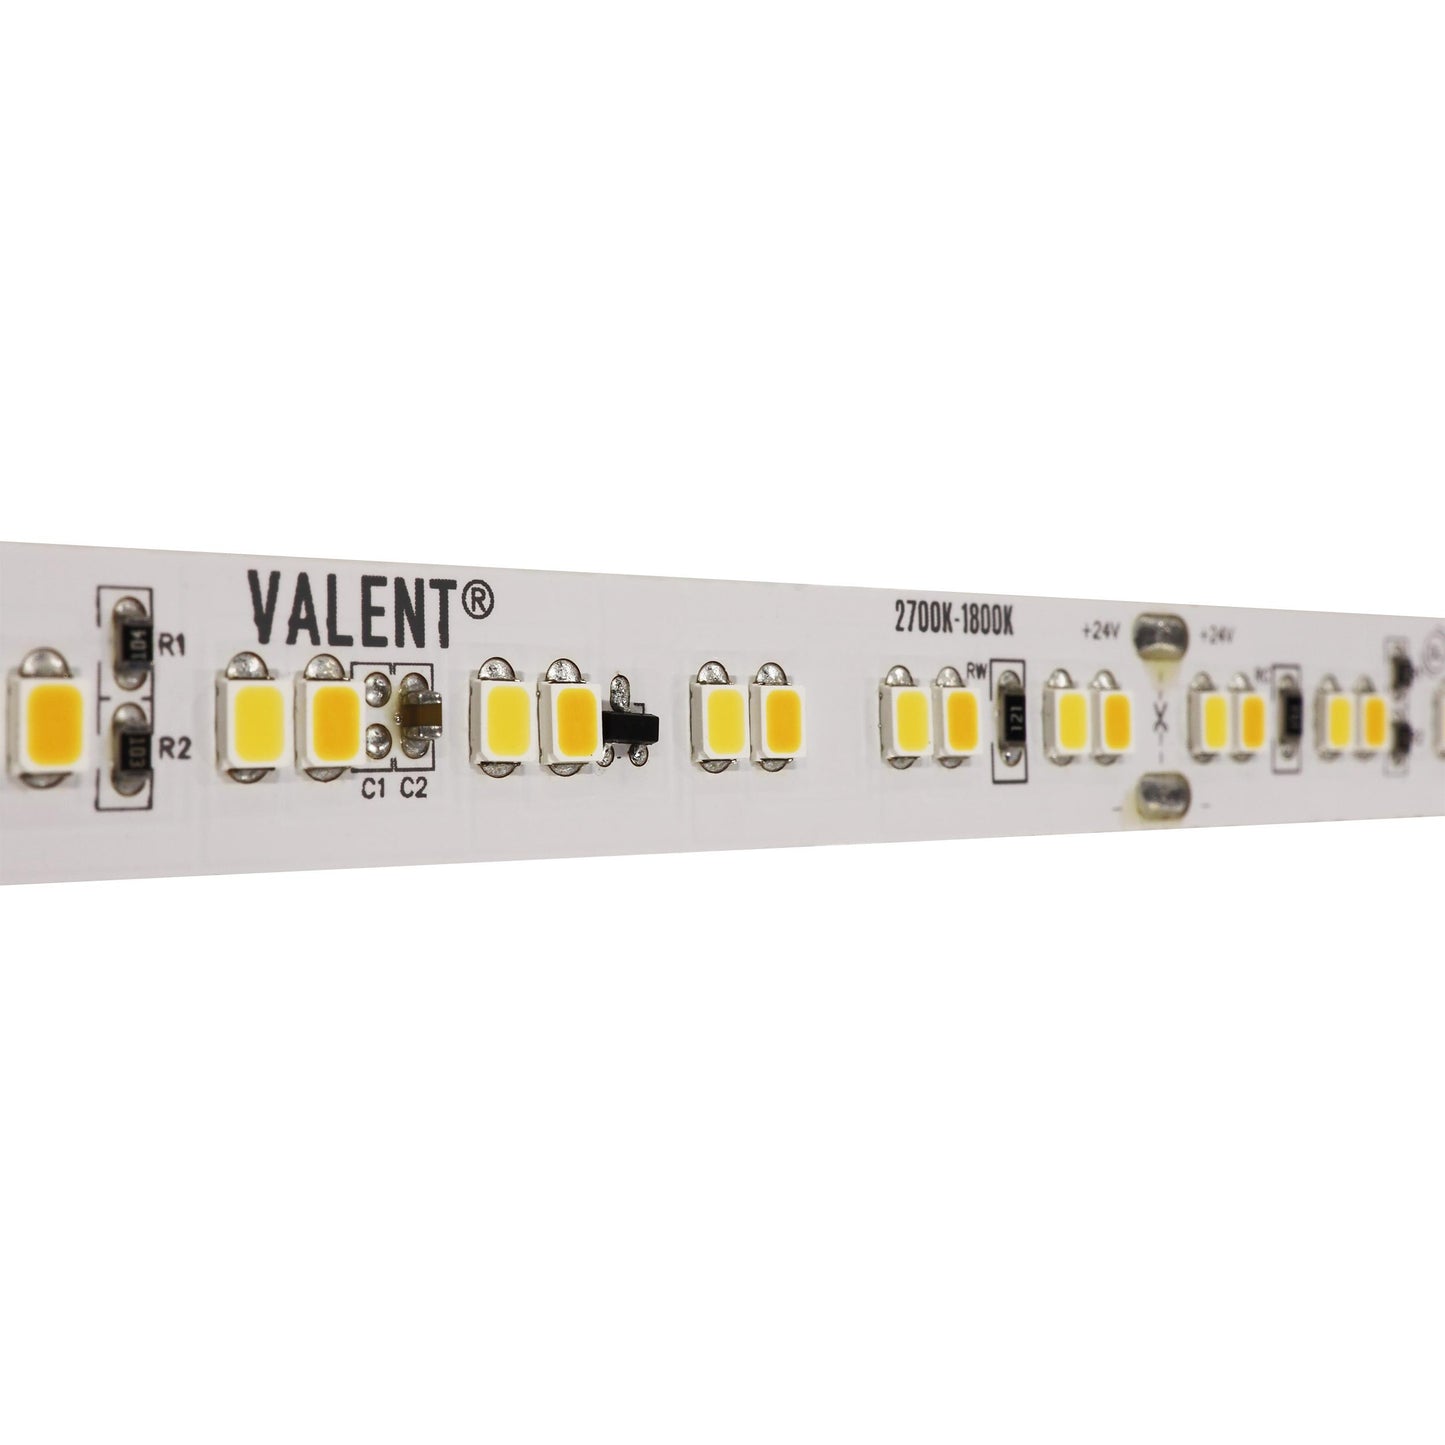 Diode LED DI-24V-VL1-WD3018-016 16.4ft 1.54W/ft Valent Warm Dim LED Tape Light 3000K-1800K 24V